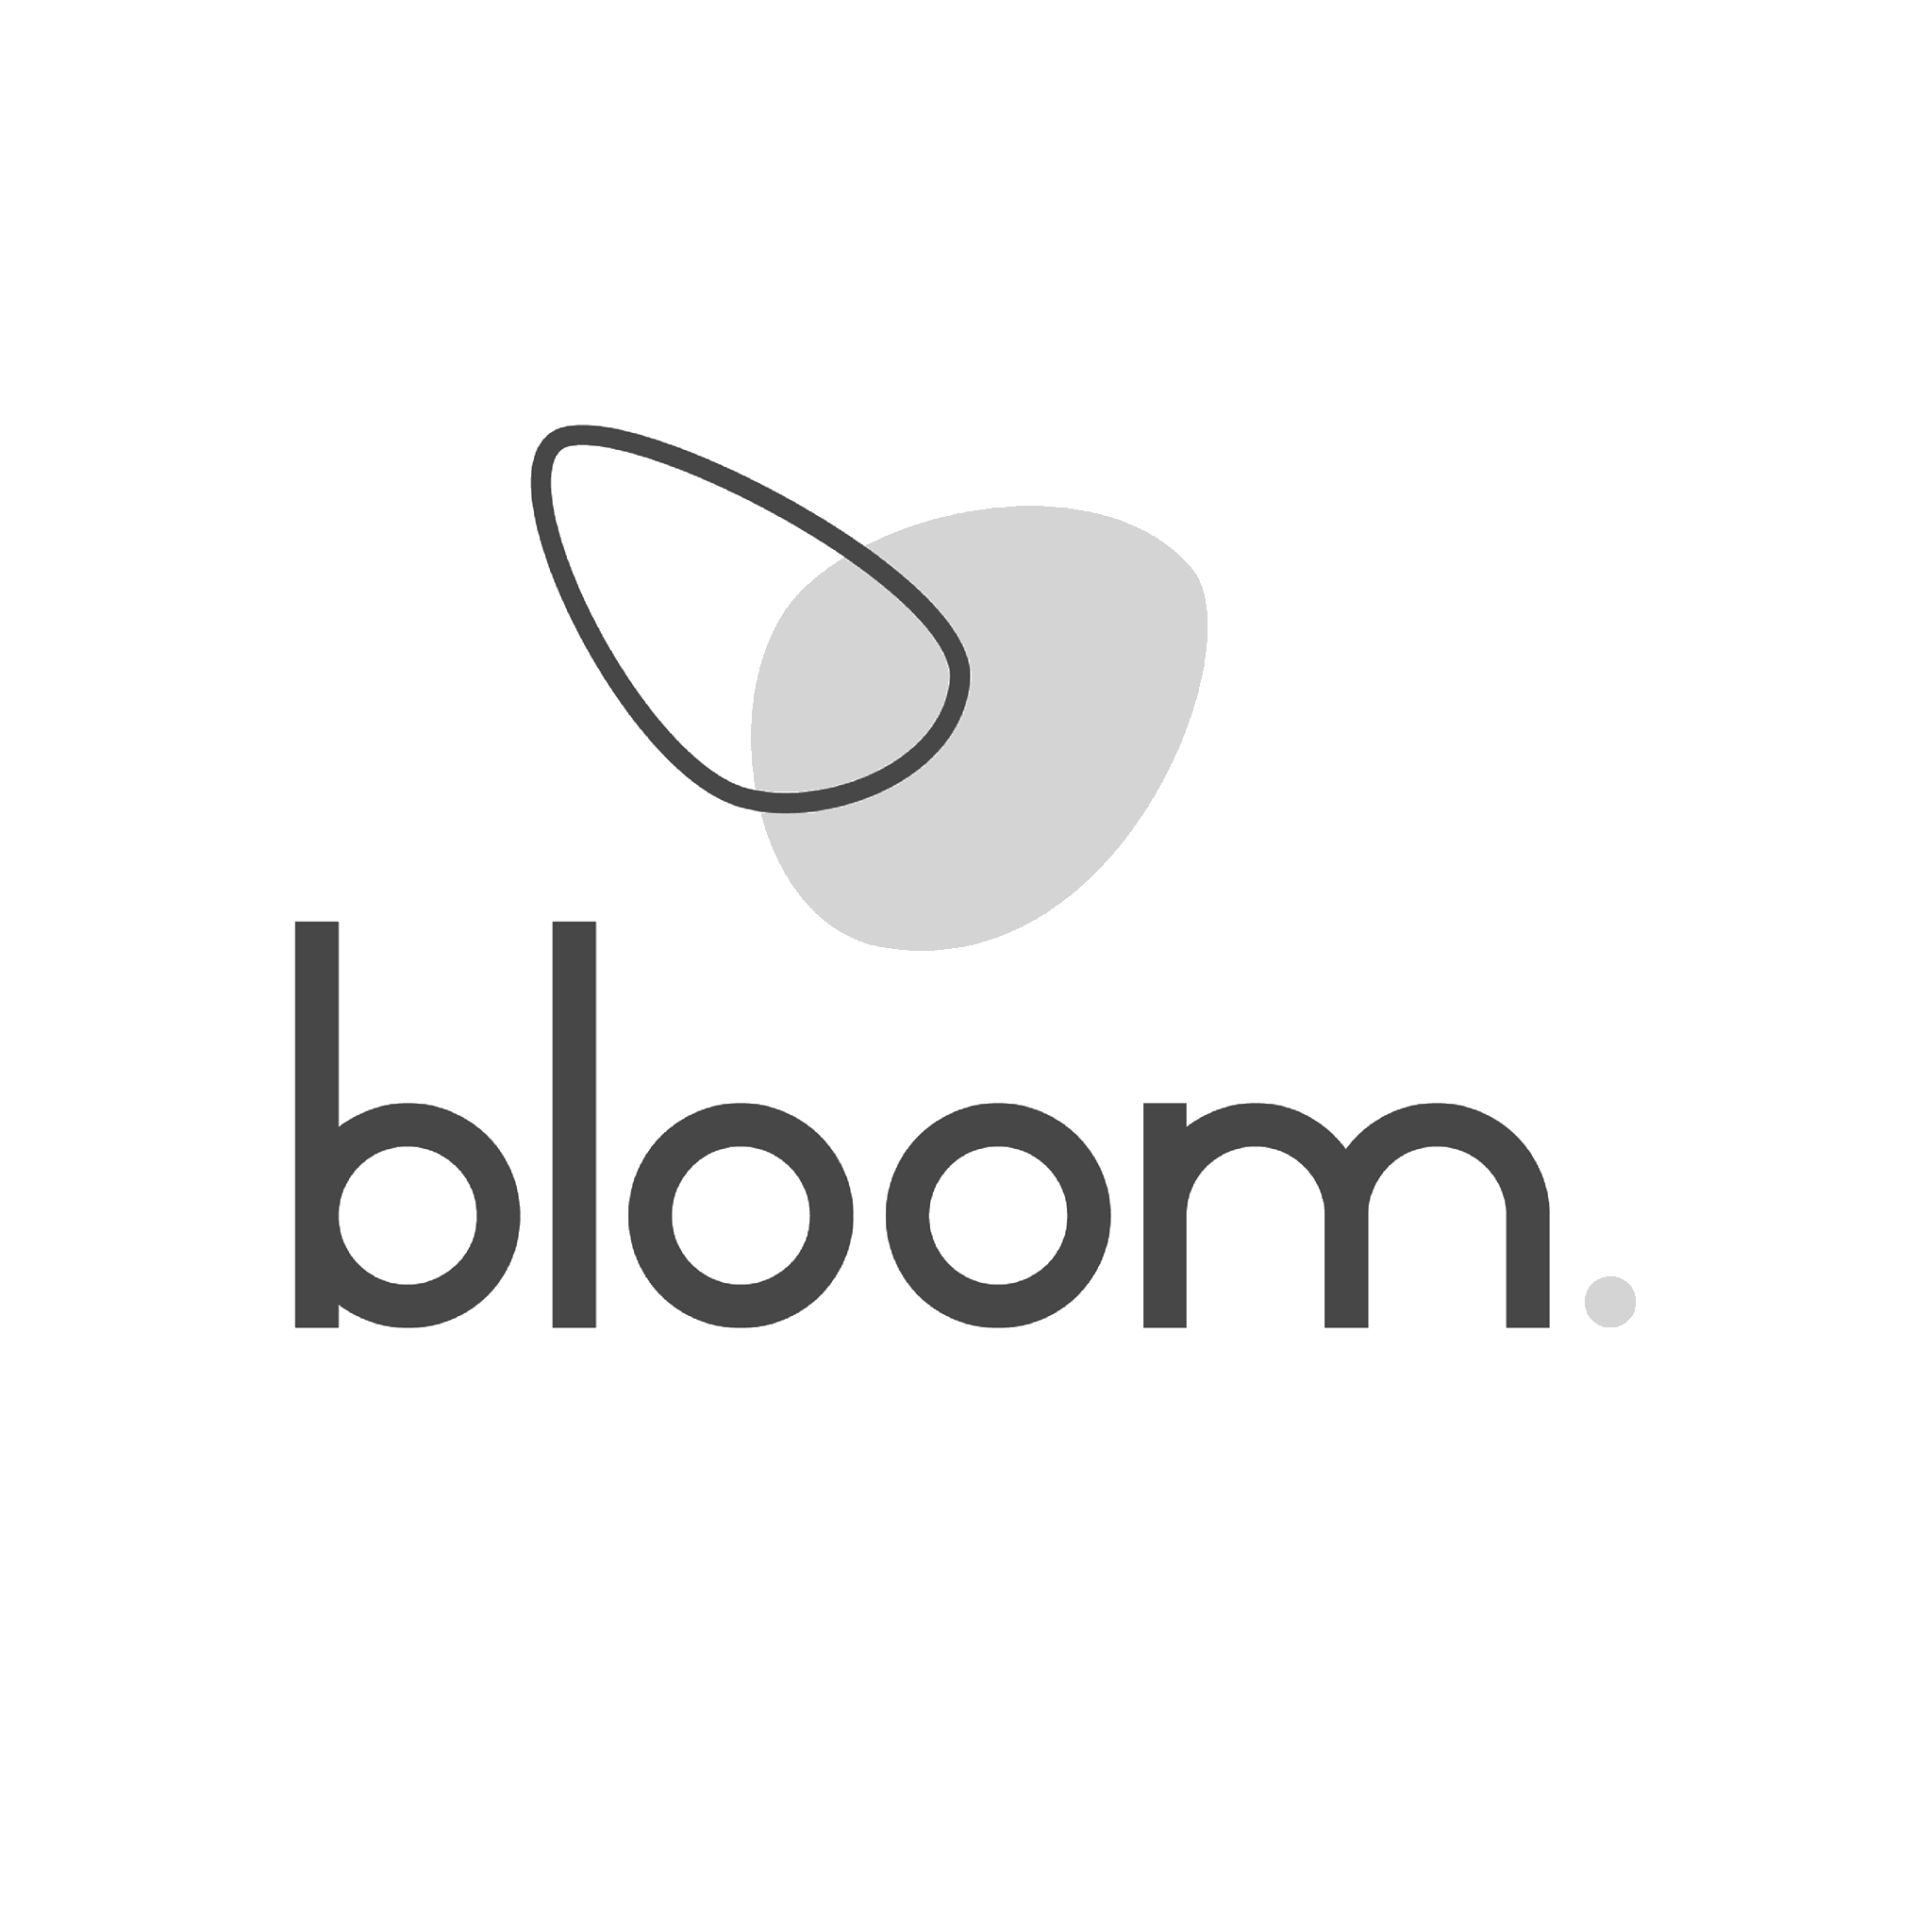 logo-bloom